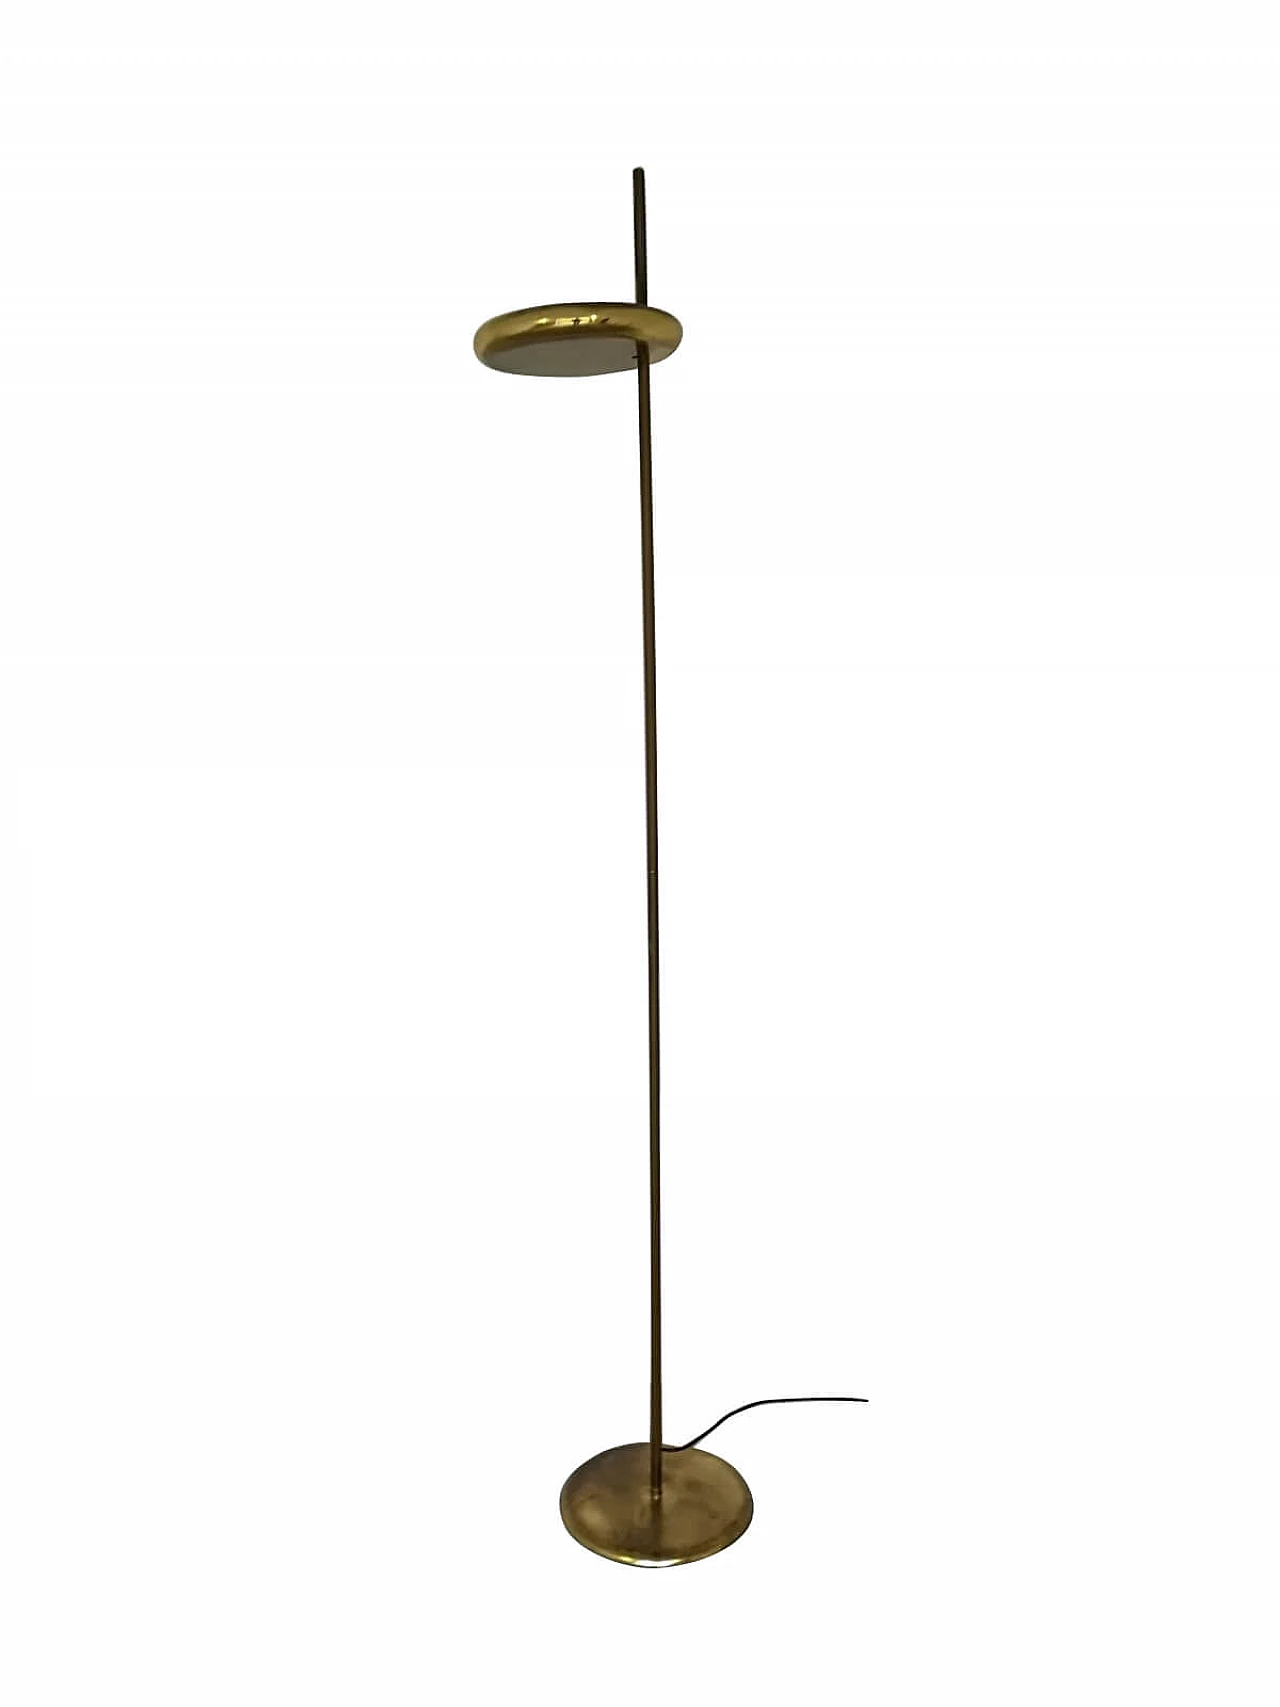 Brass floor lamp, Luci Milano, 1950s 1077146